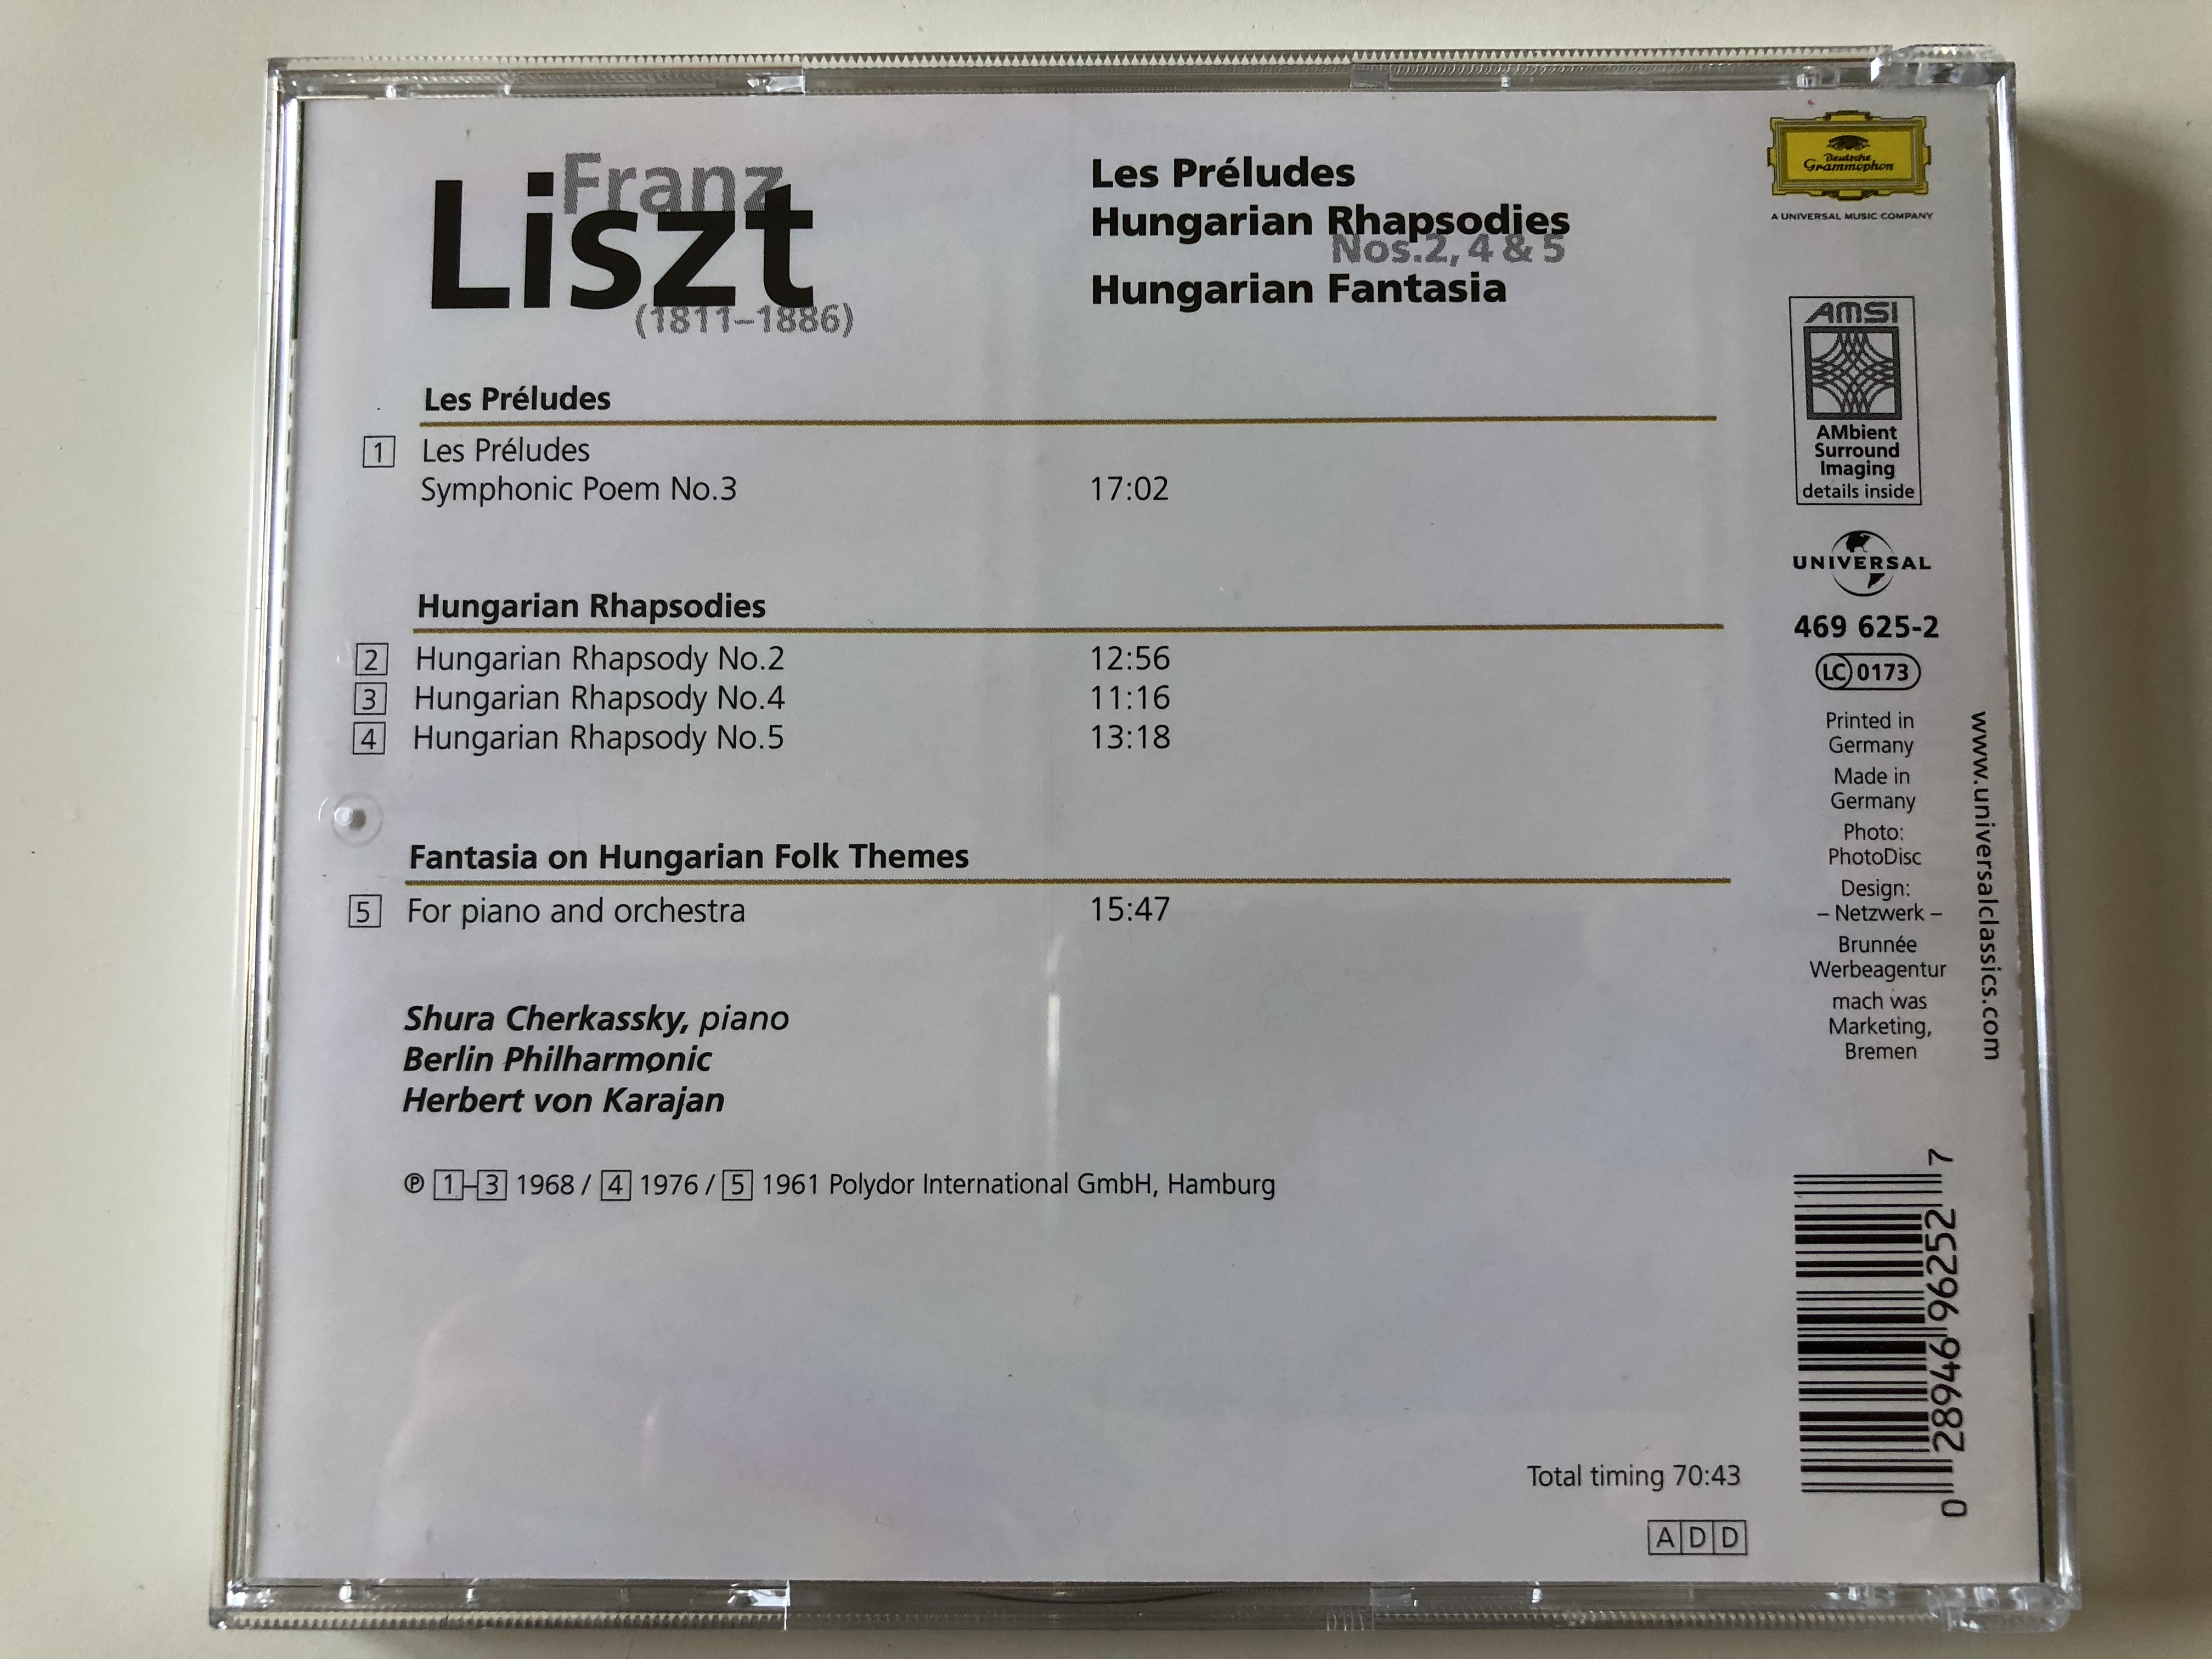 franz-liszt-les-preludes-hungarian-rhapsodies-nos.-2-4-5-hungarian-fantasia-berlin-philharmonic-herbet-von-karajan-deutsche-grammophon-audio-cd-469-625-2-4-.jpg